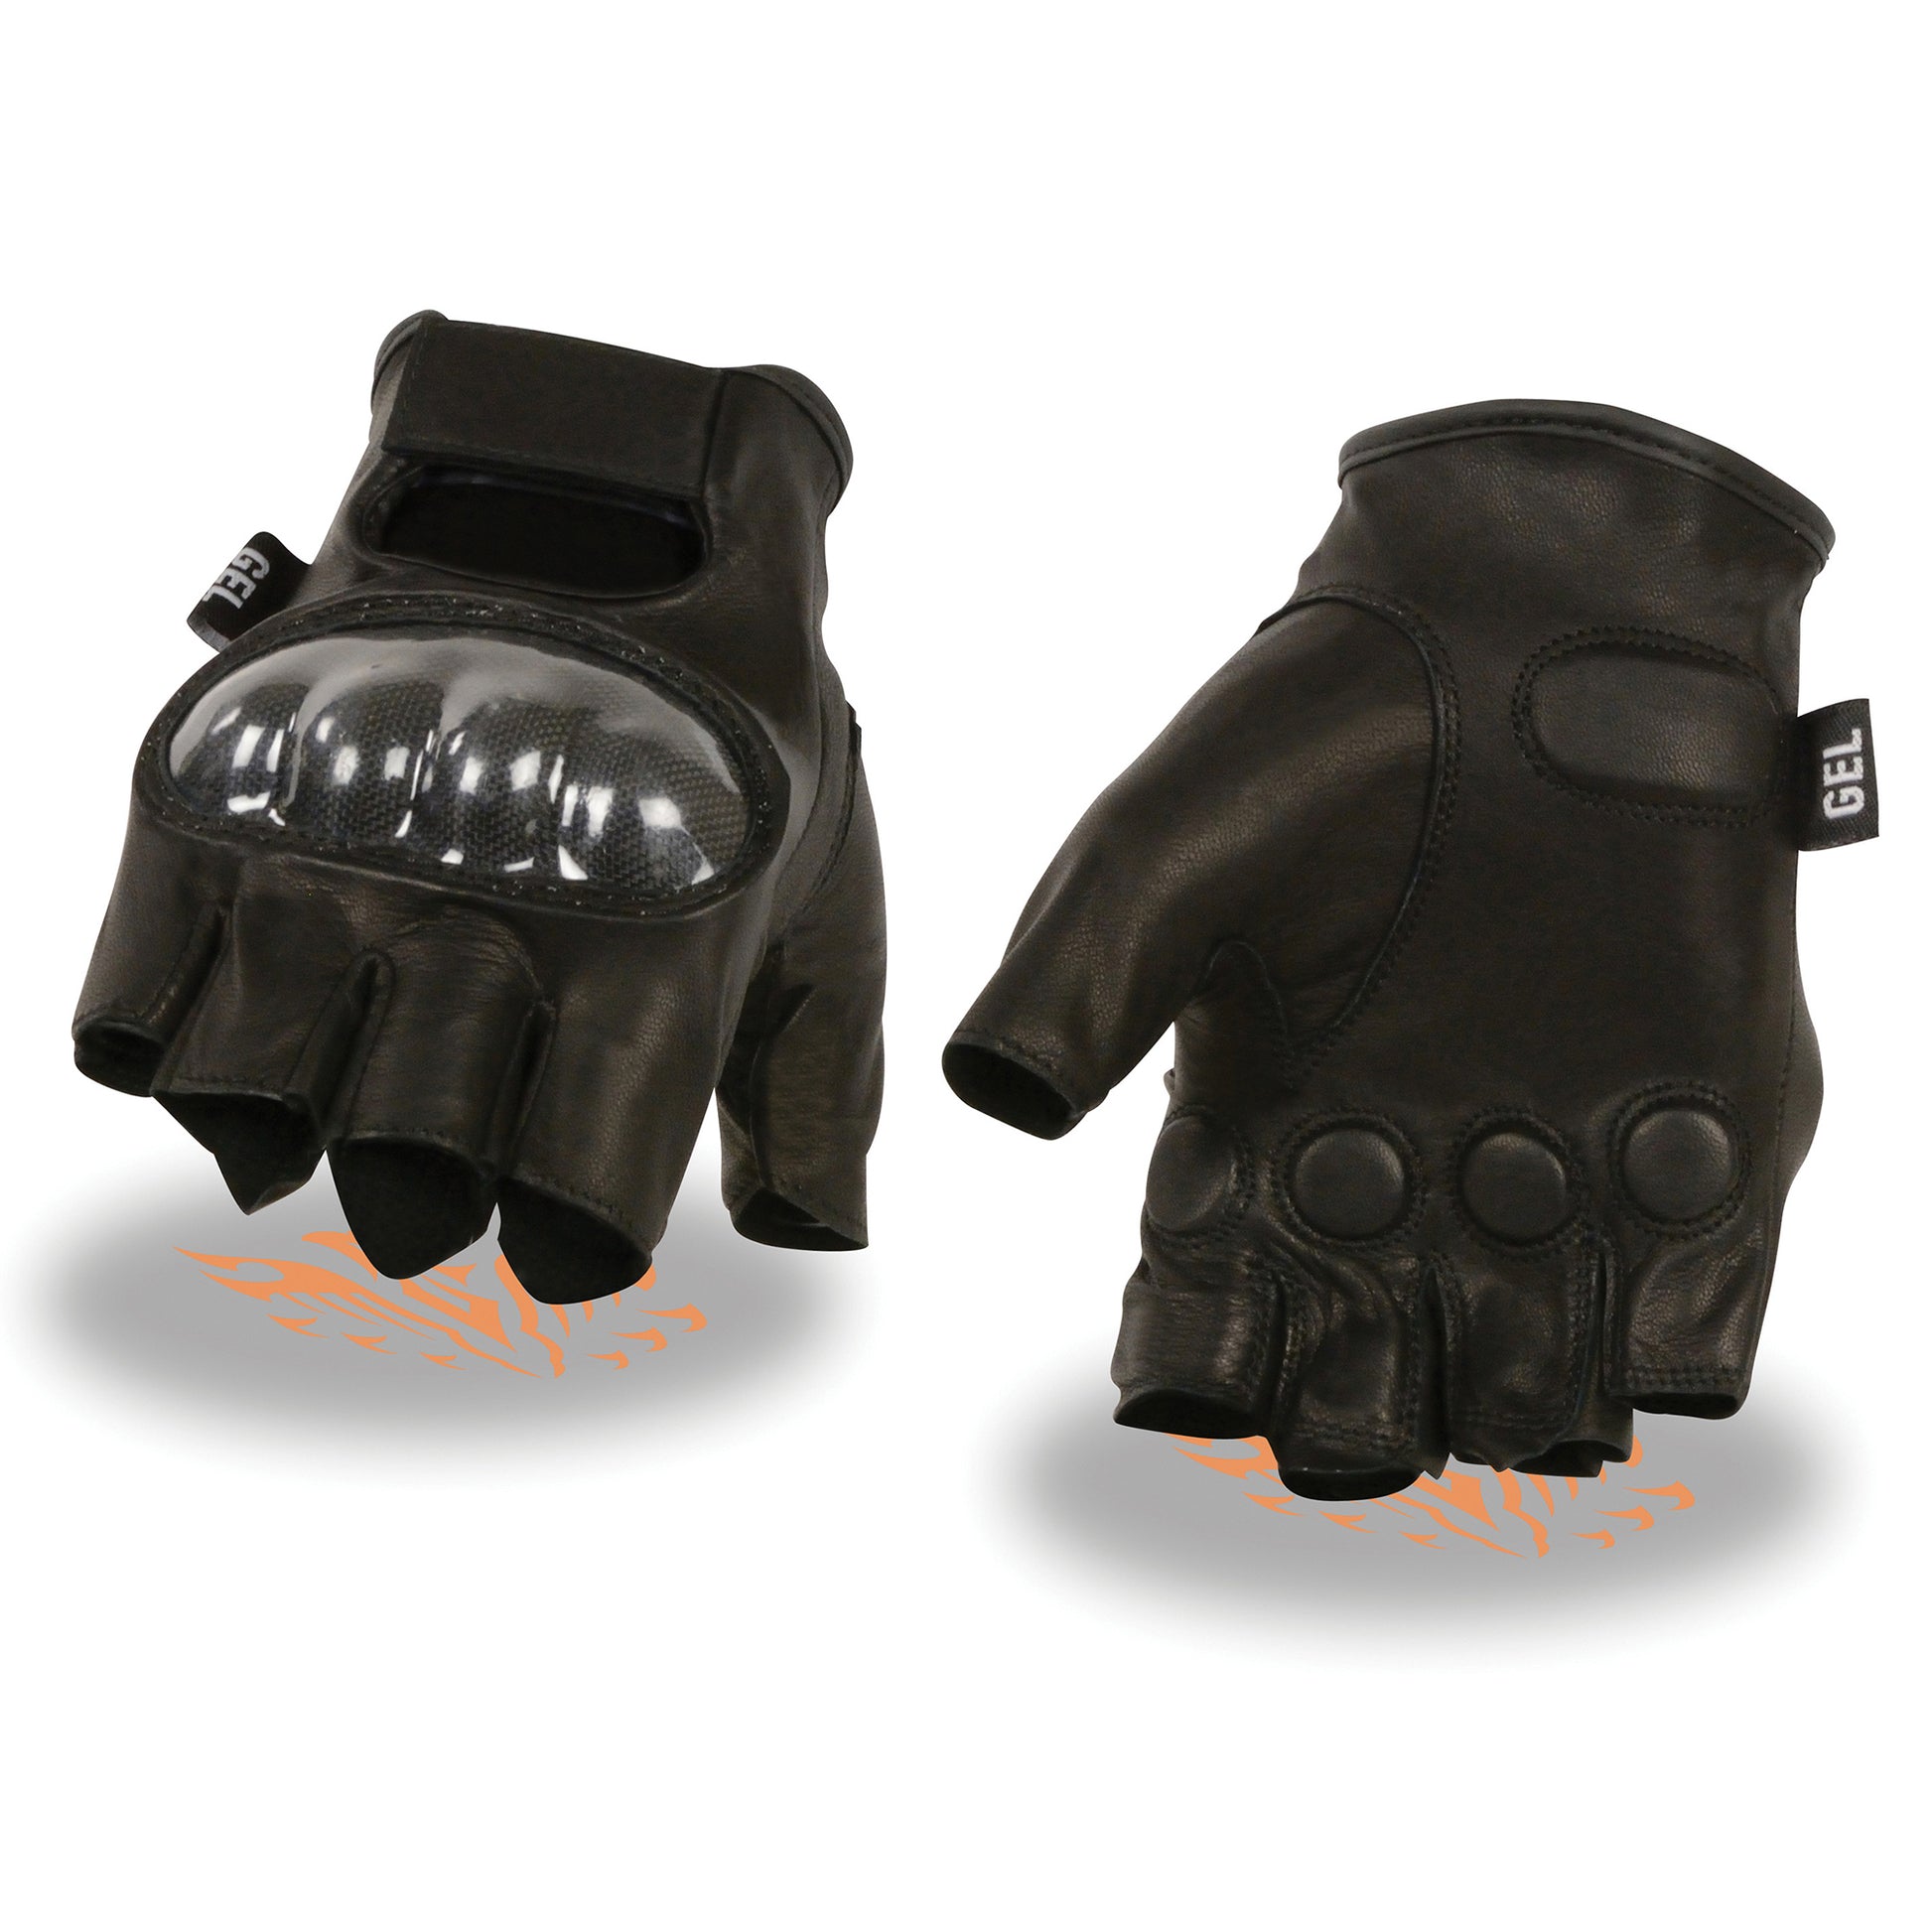 Men's Leather Fingerless Glove w/ Hard Knuckles, Gel Palm